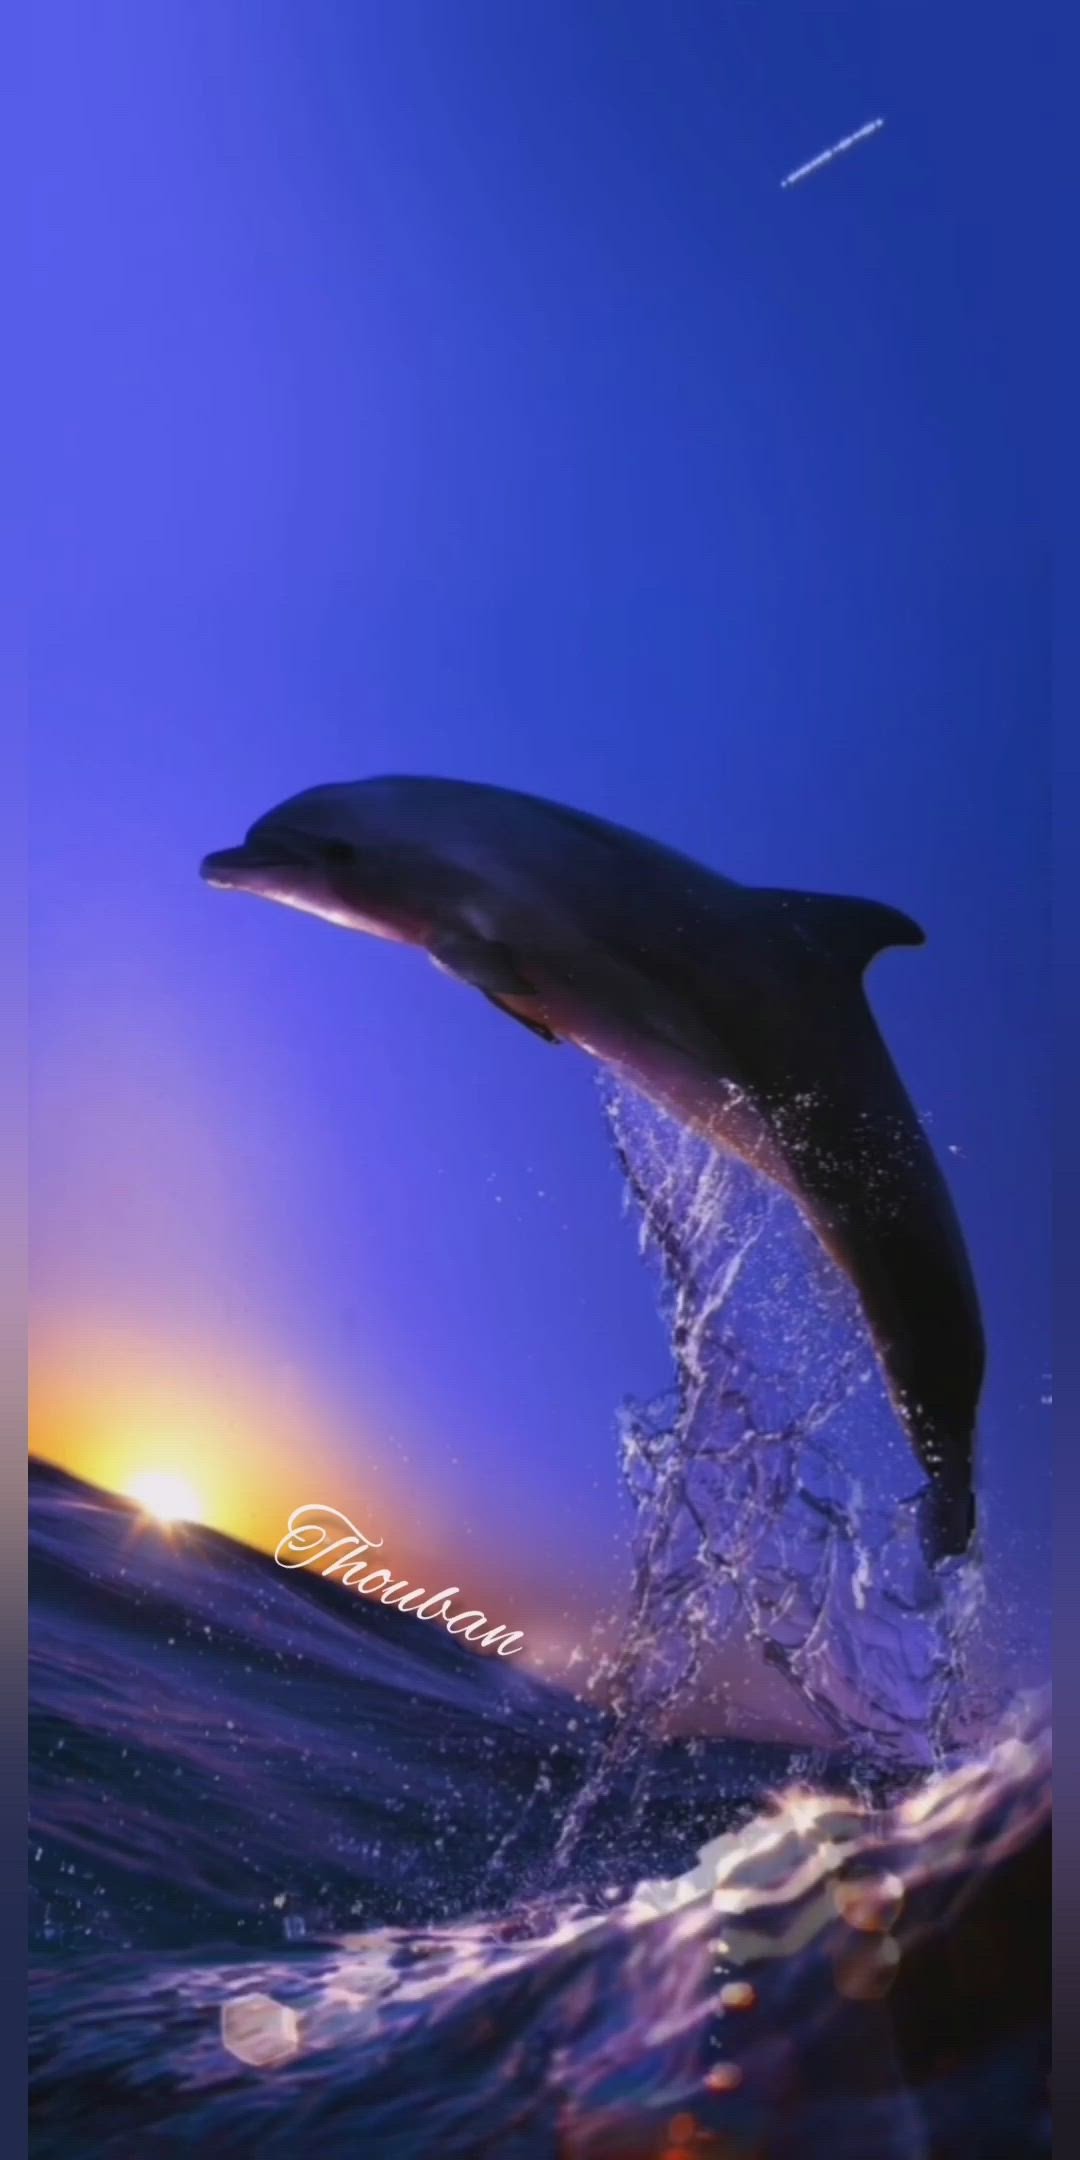 dolphins sunset purple